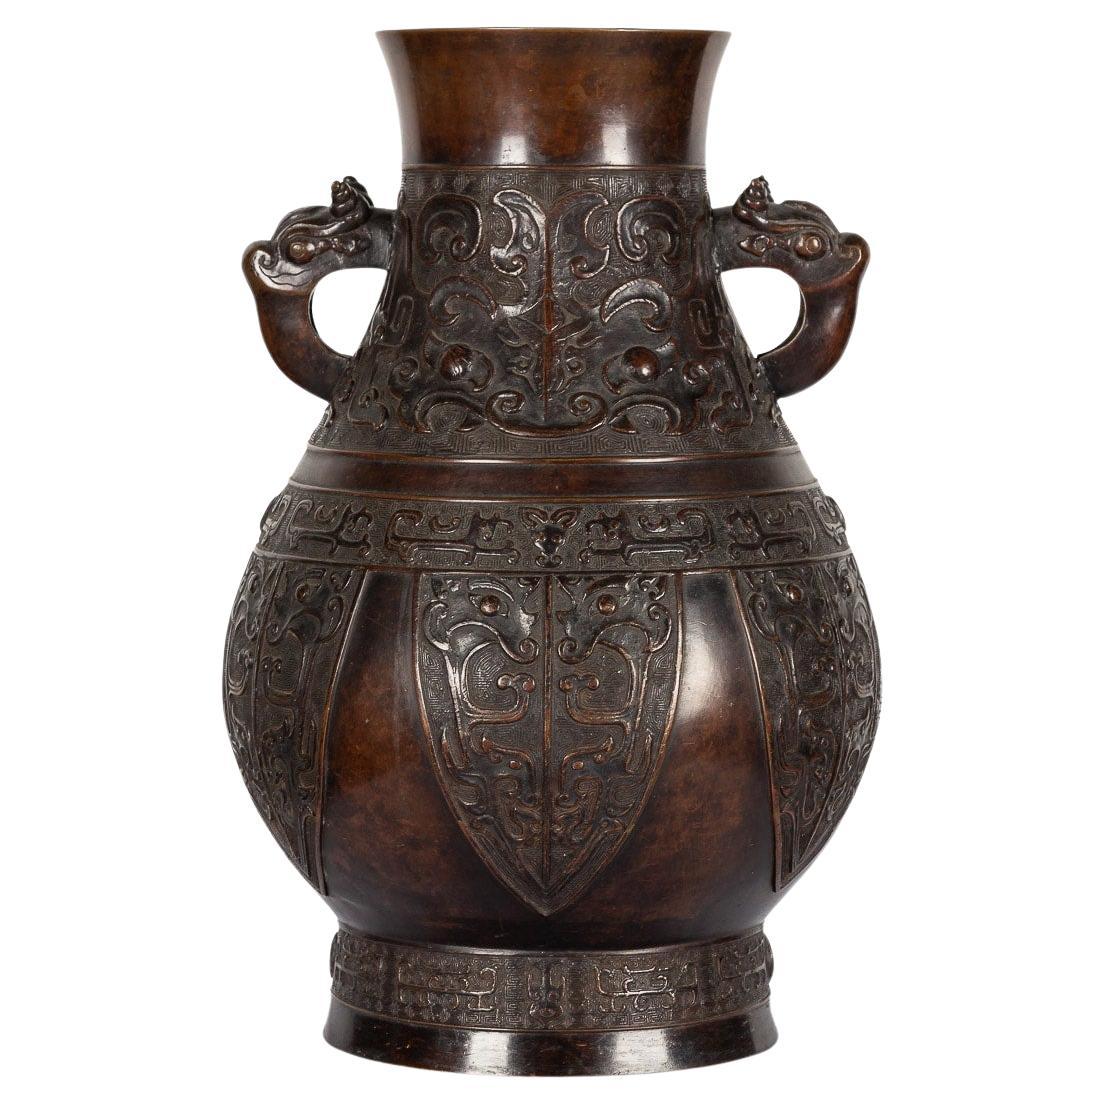 19th Century Chinese Archaistic Bronze Vase, c.1850